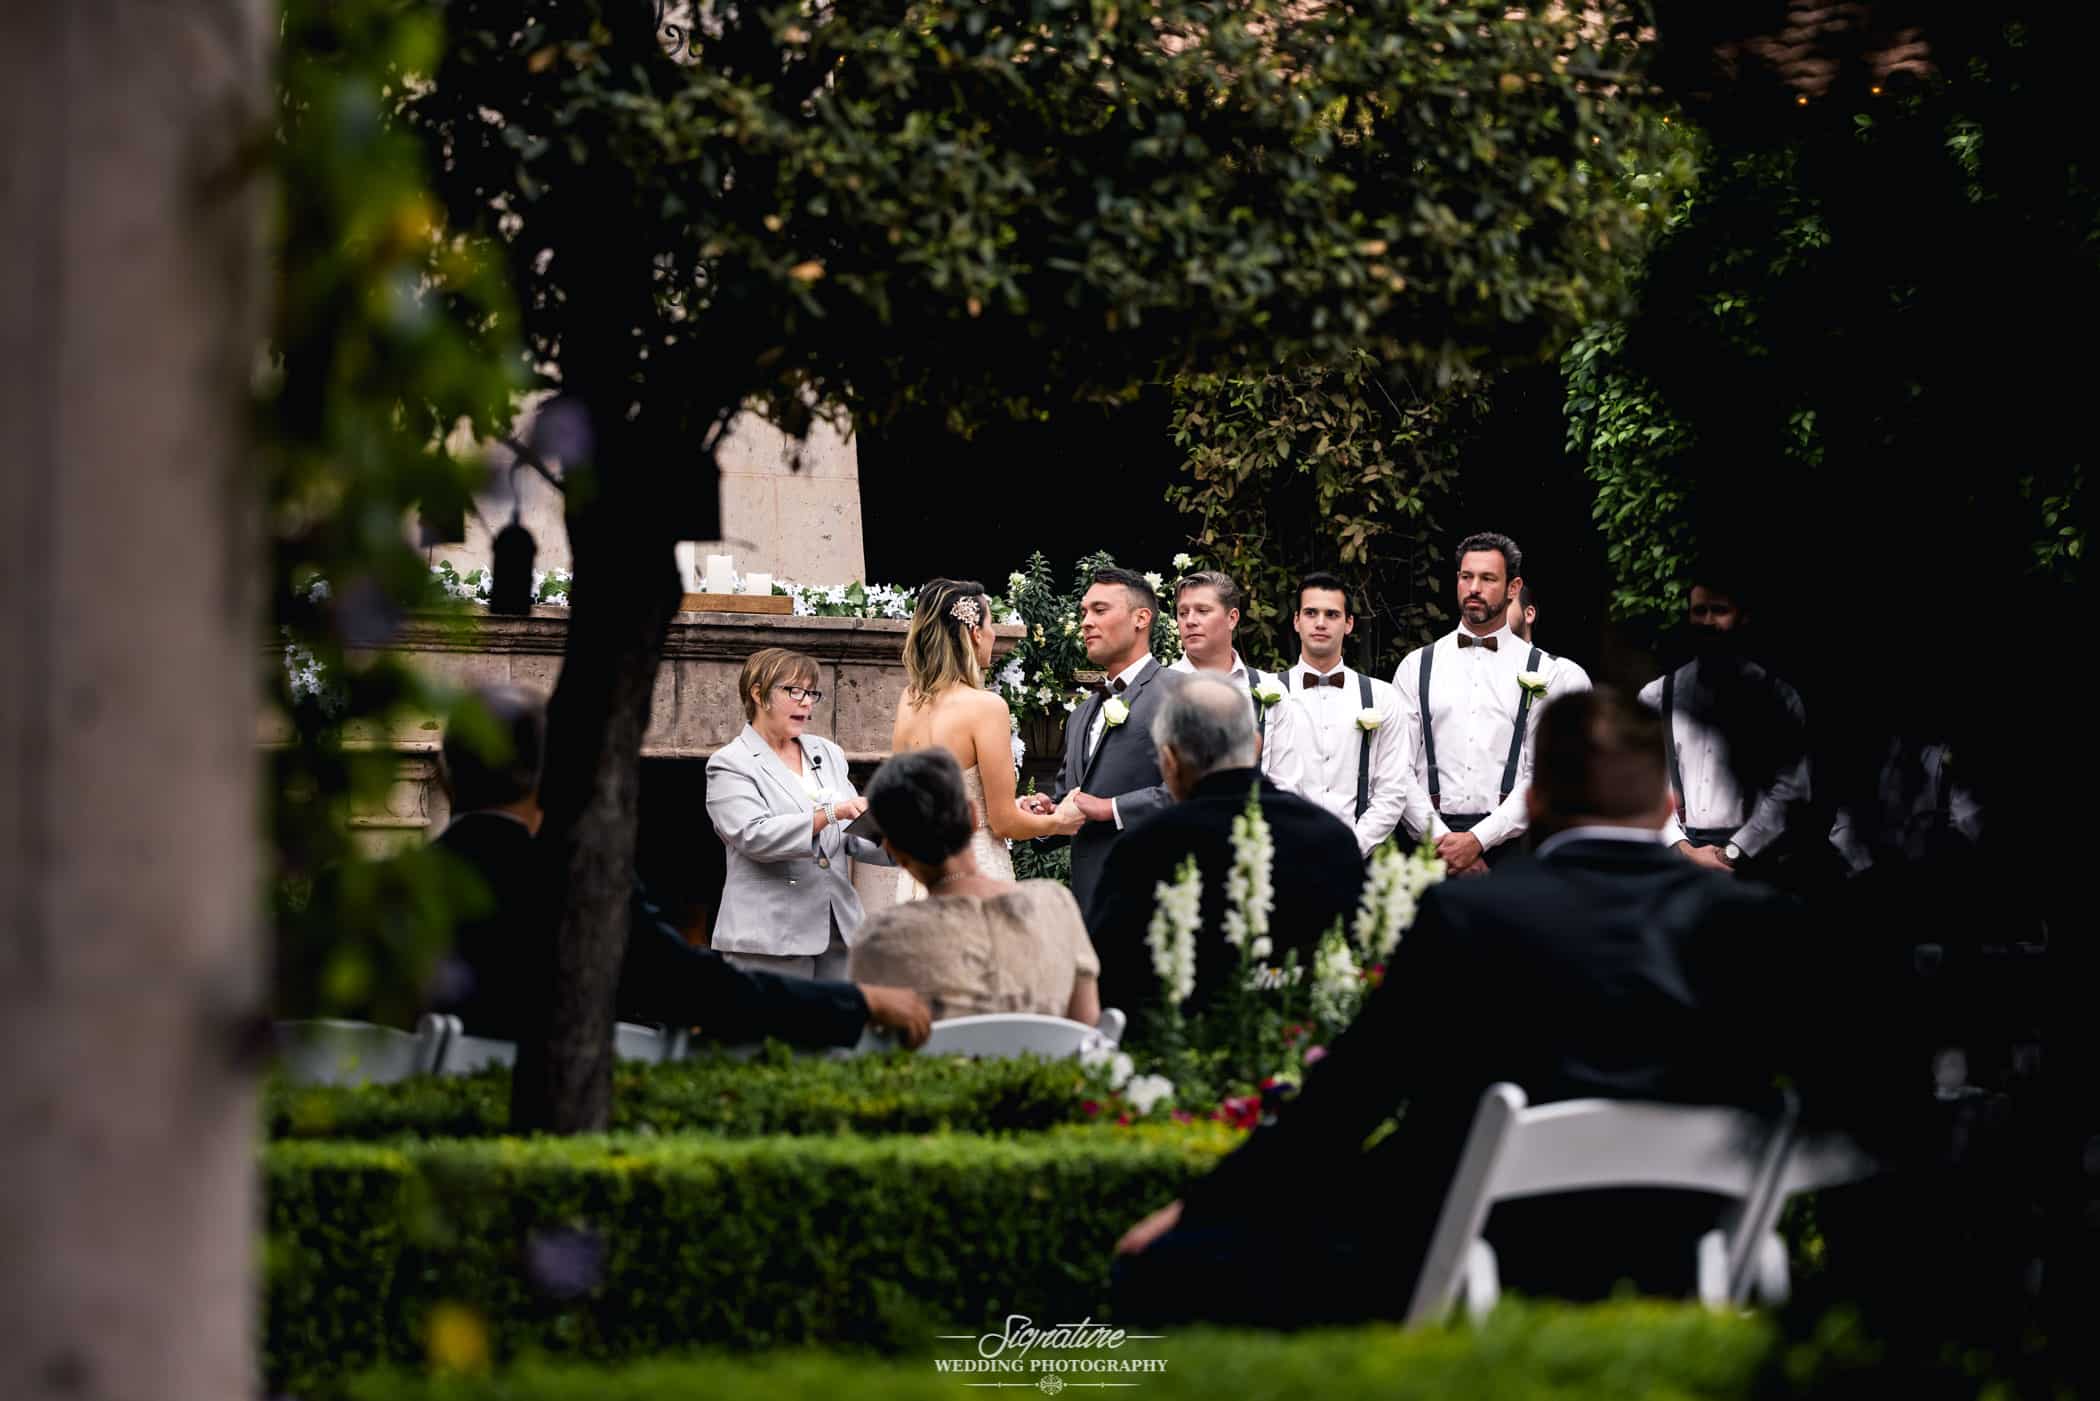 Side shot of wedding ceremony